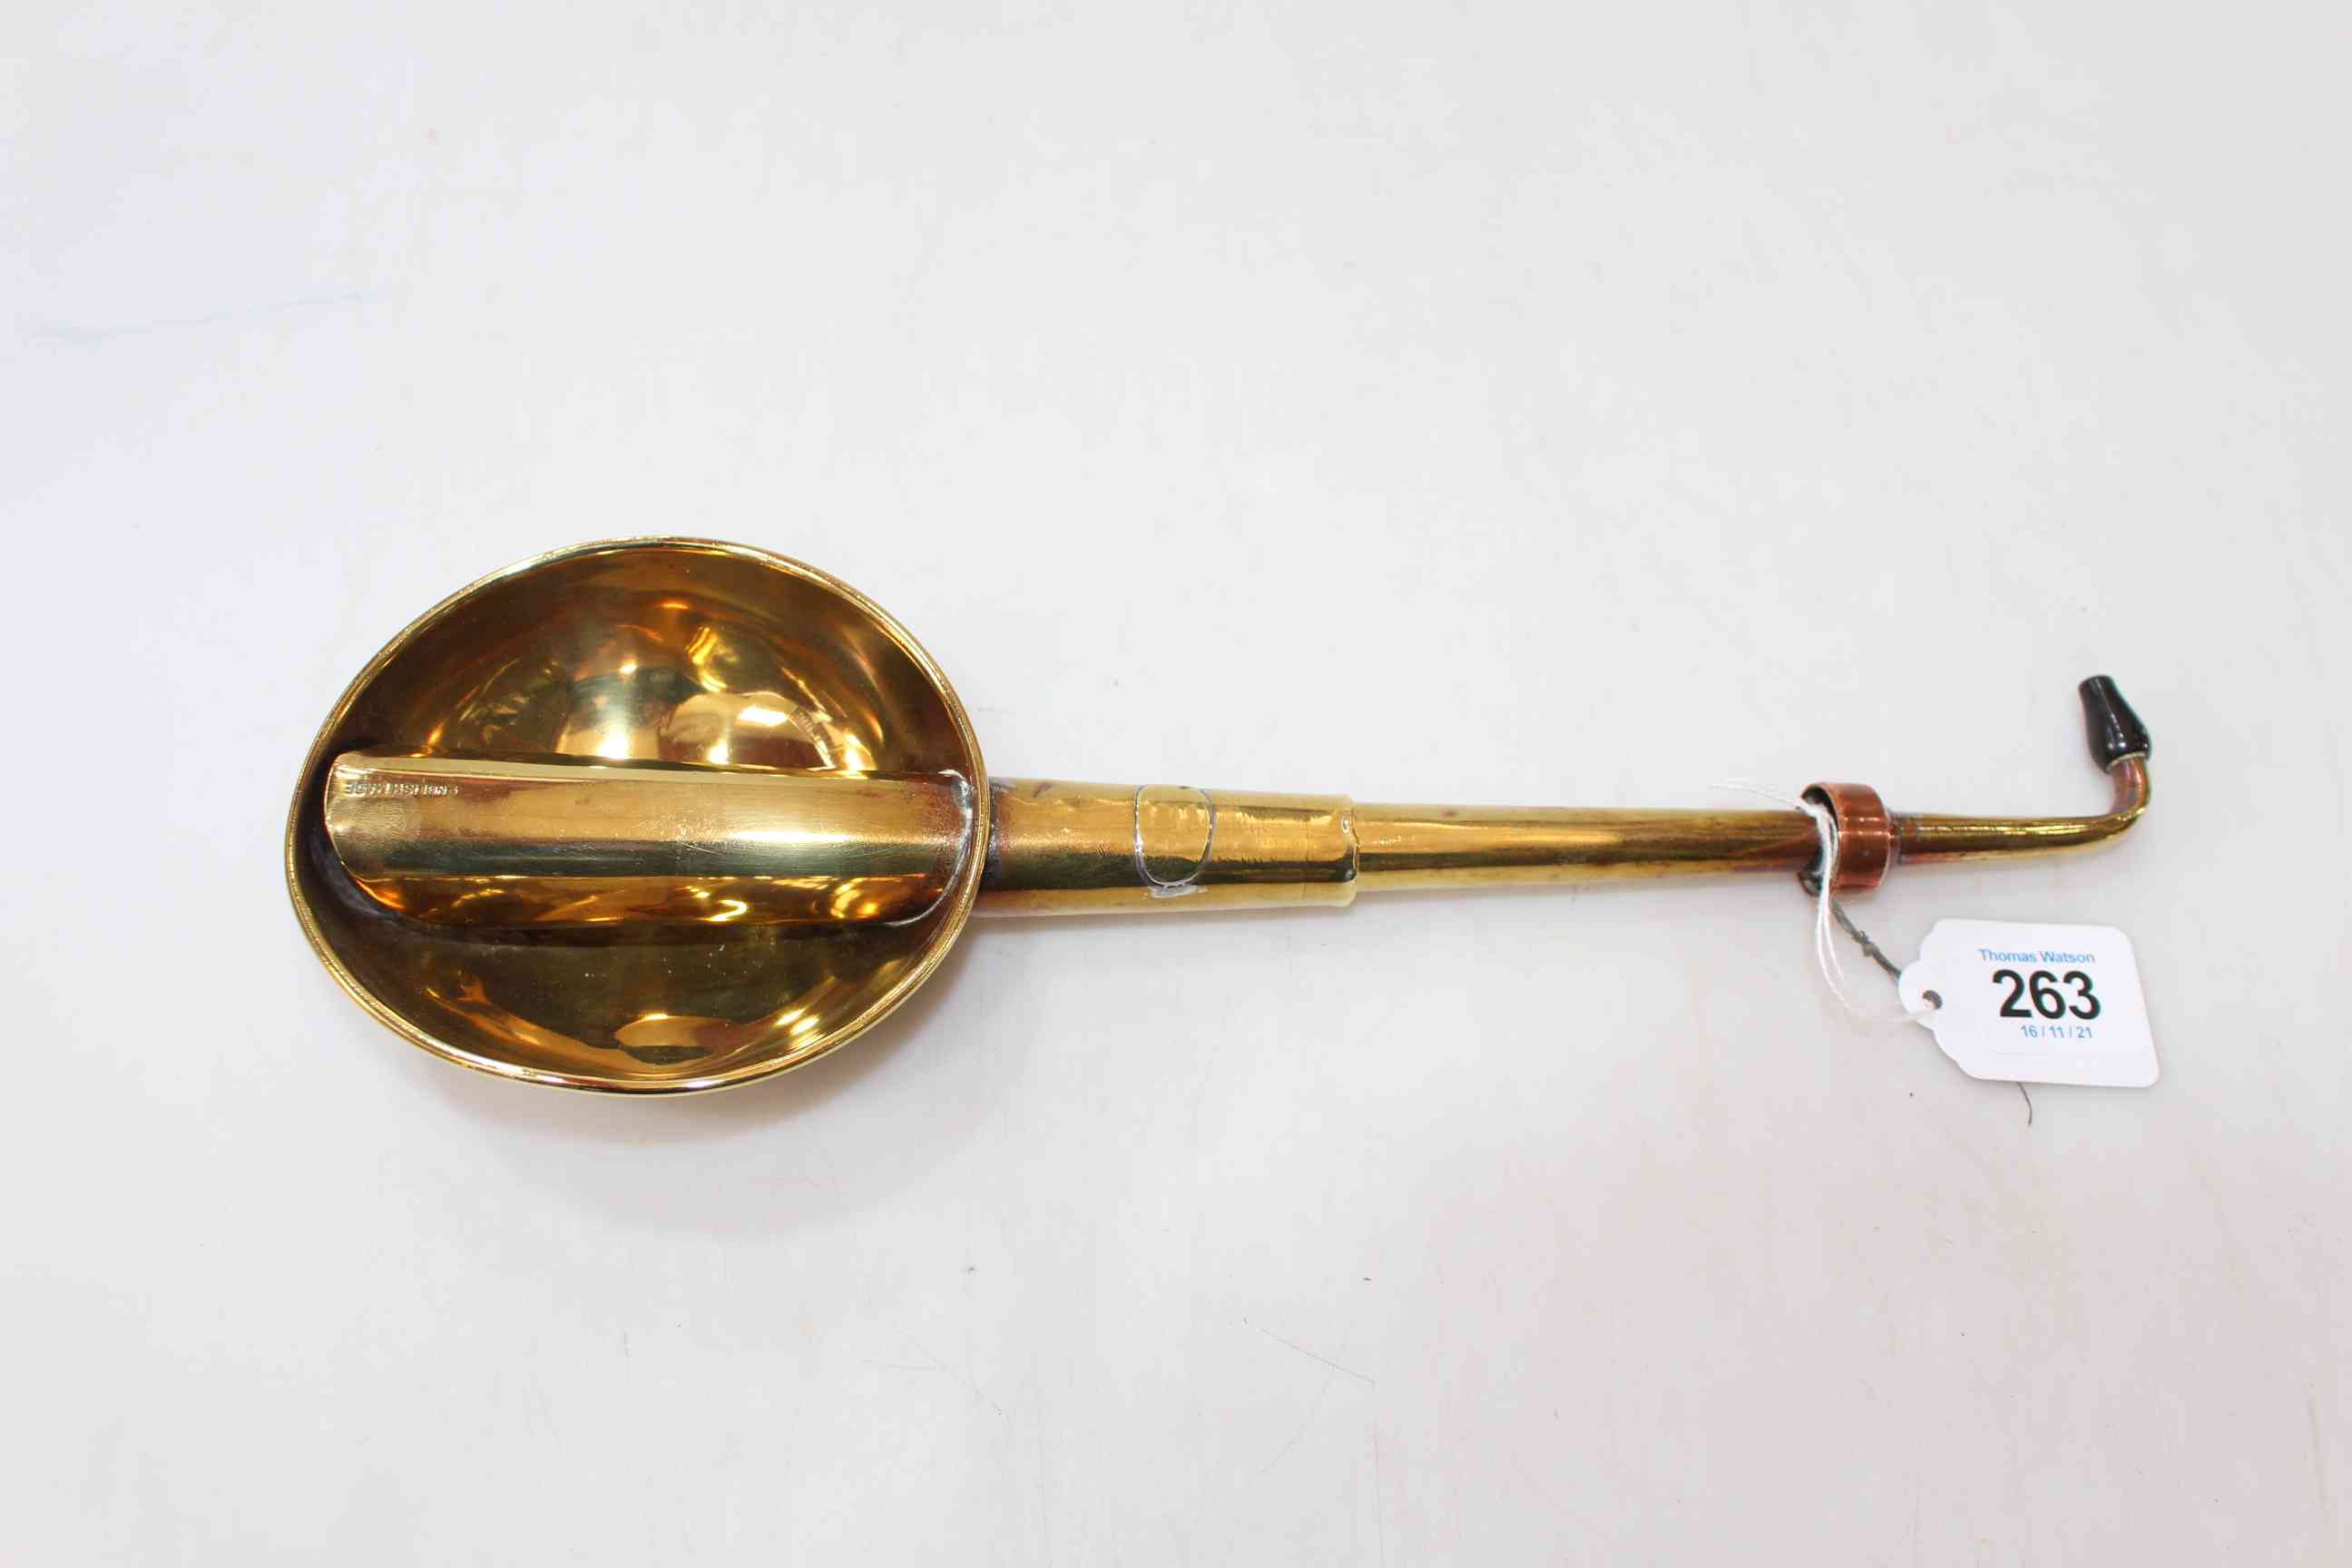 Vintage brass telescopic ear trumpet.